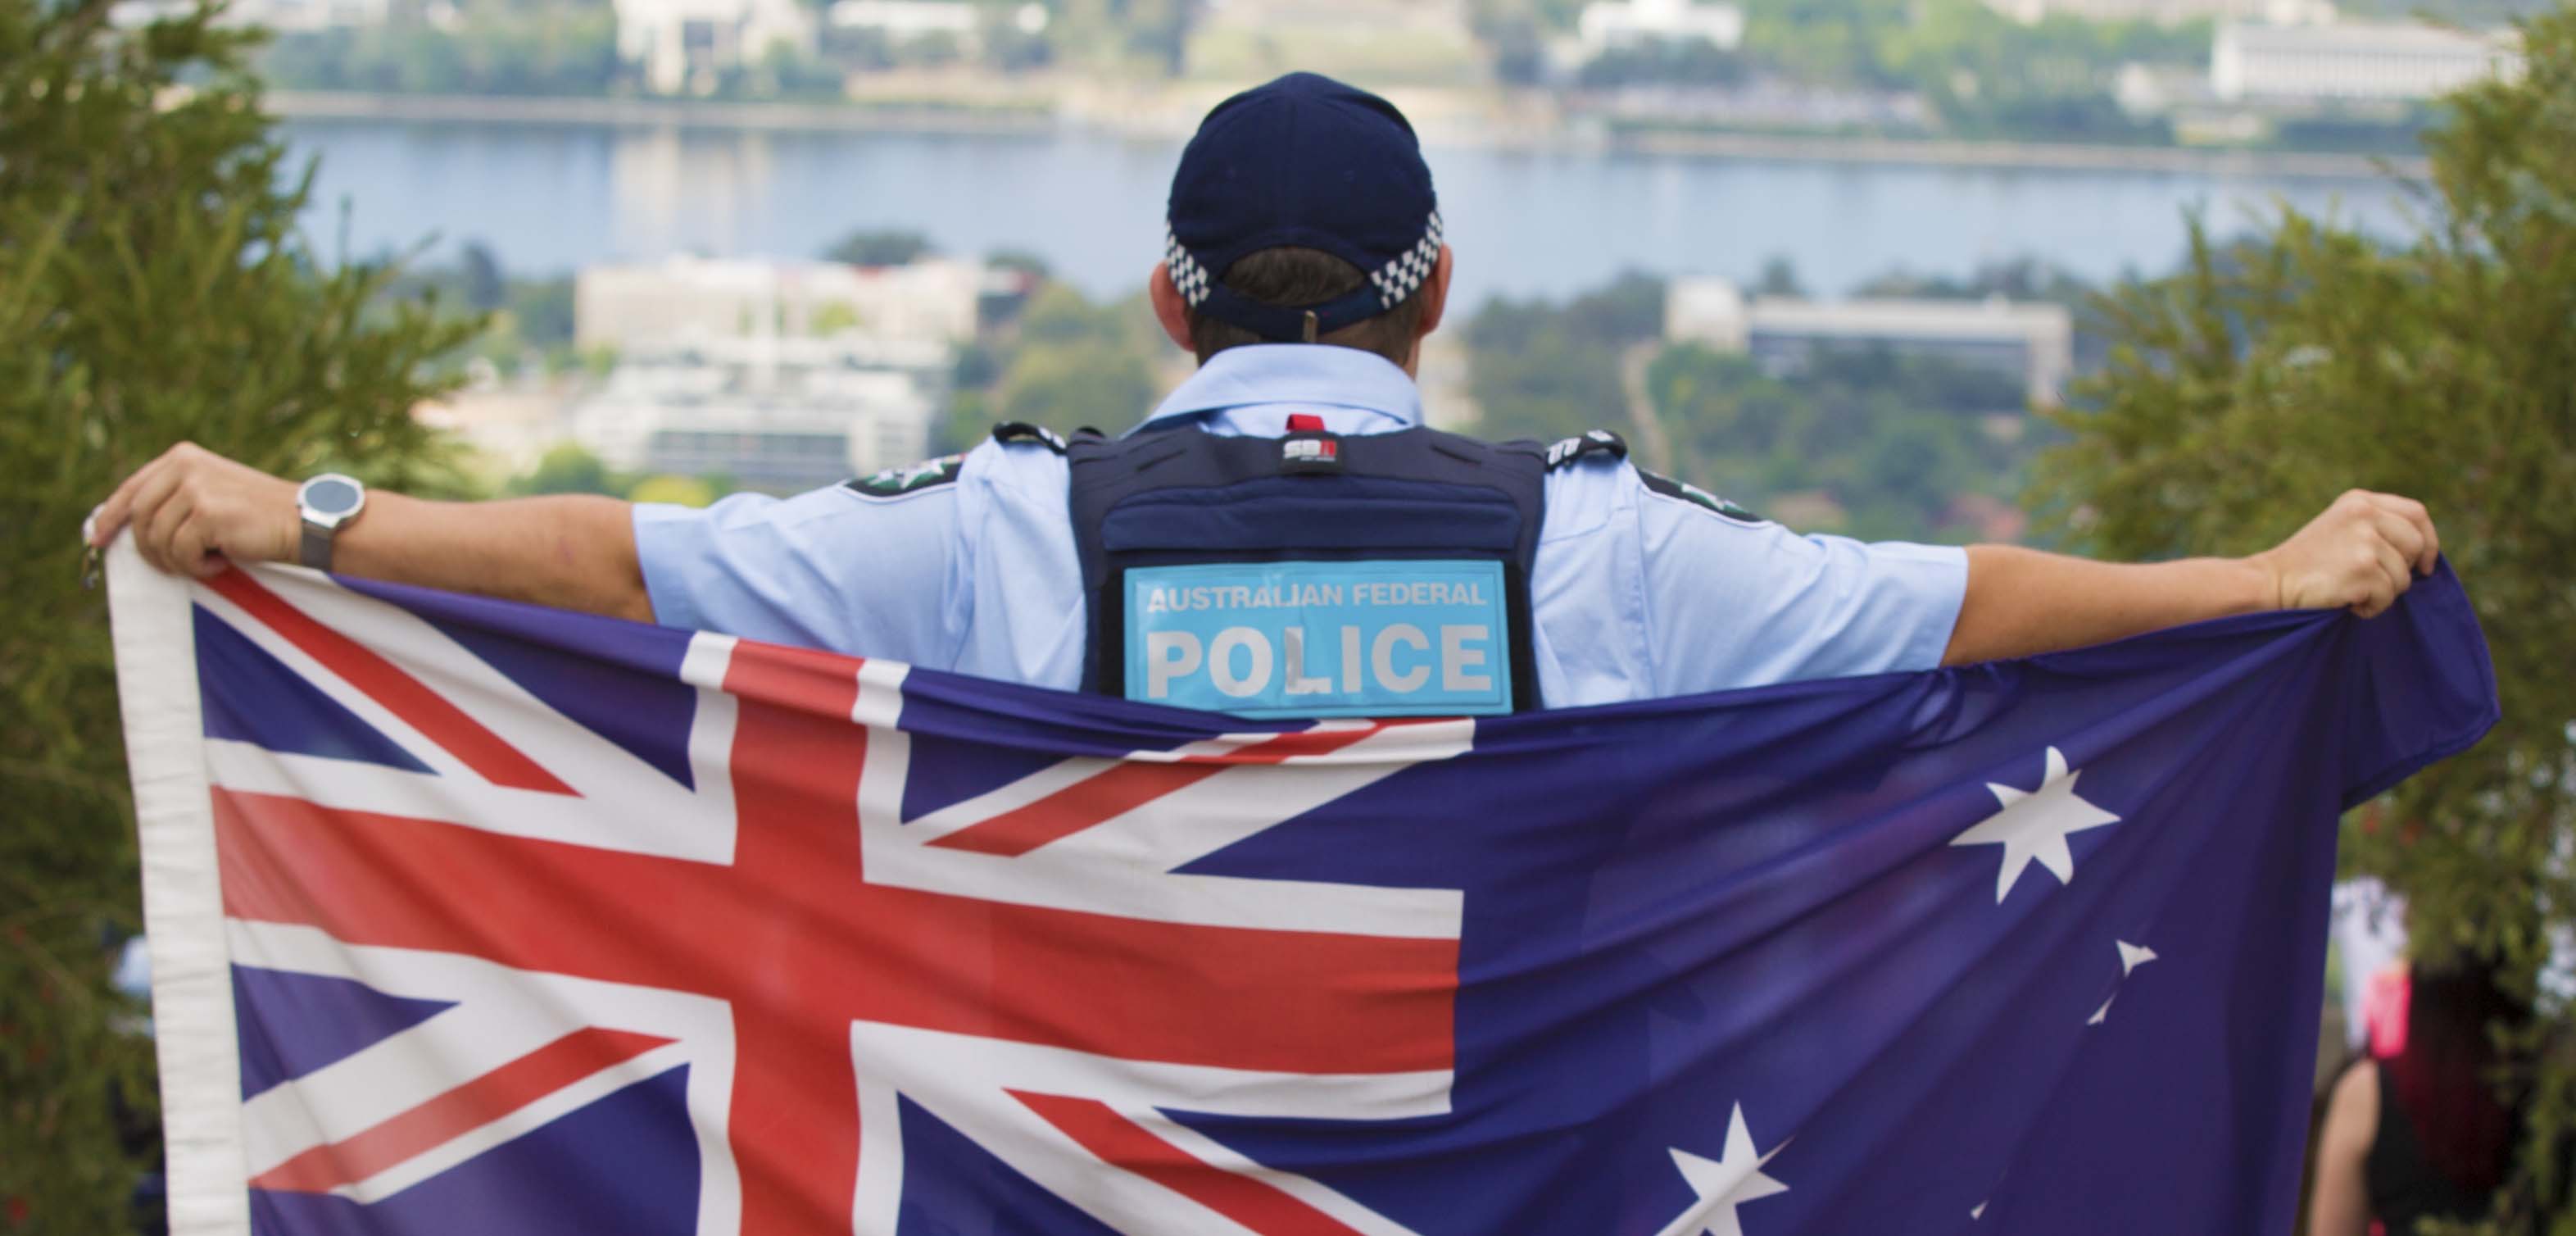 A police officer holding the Australian flag